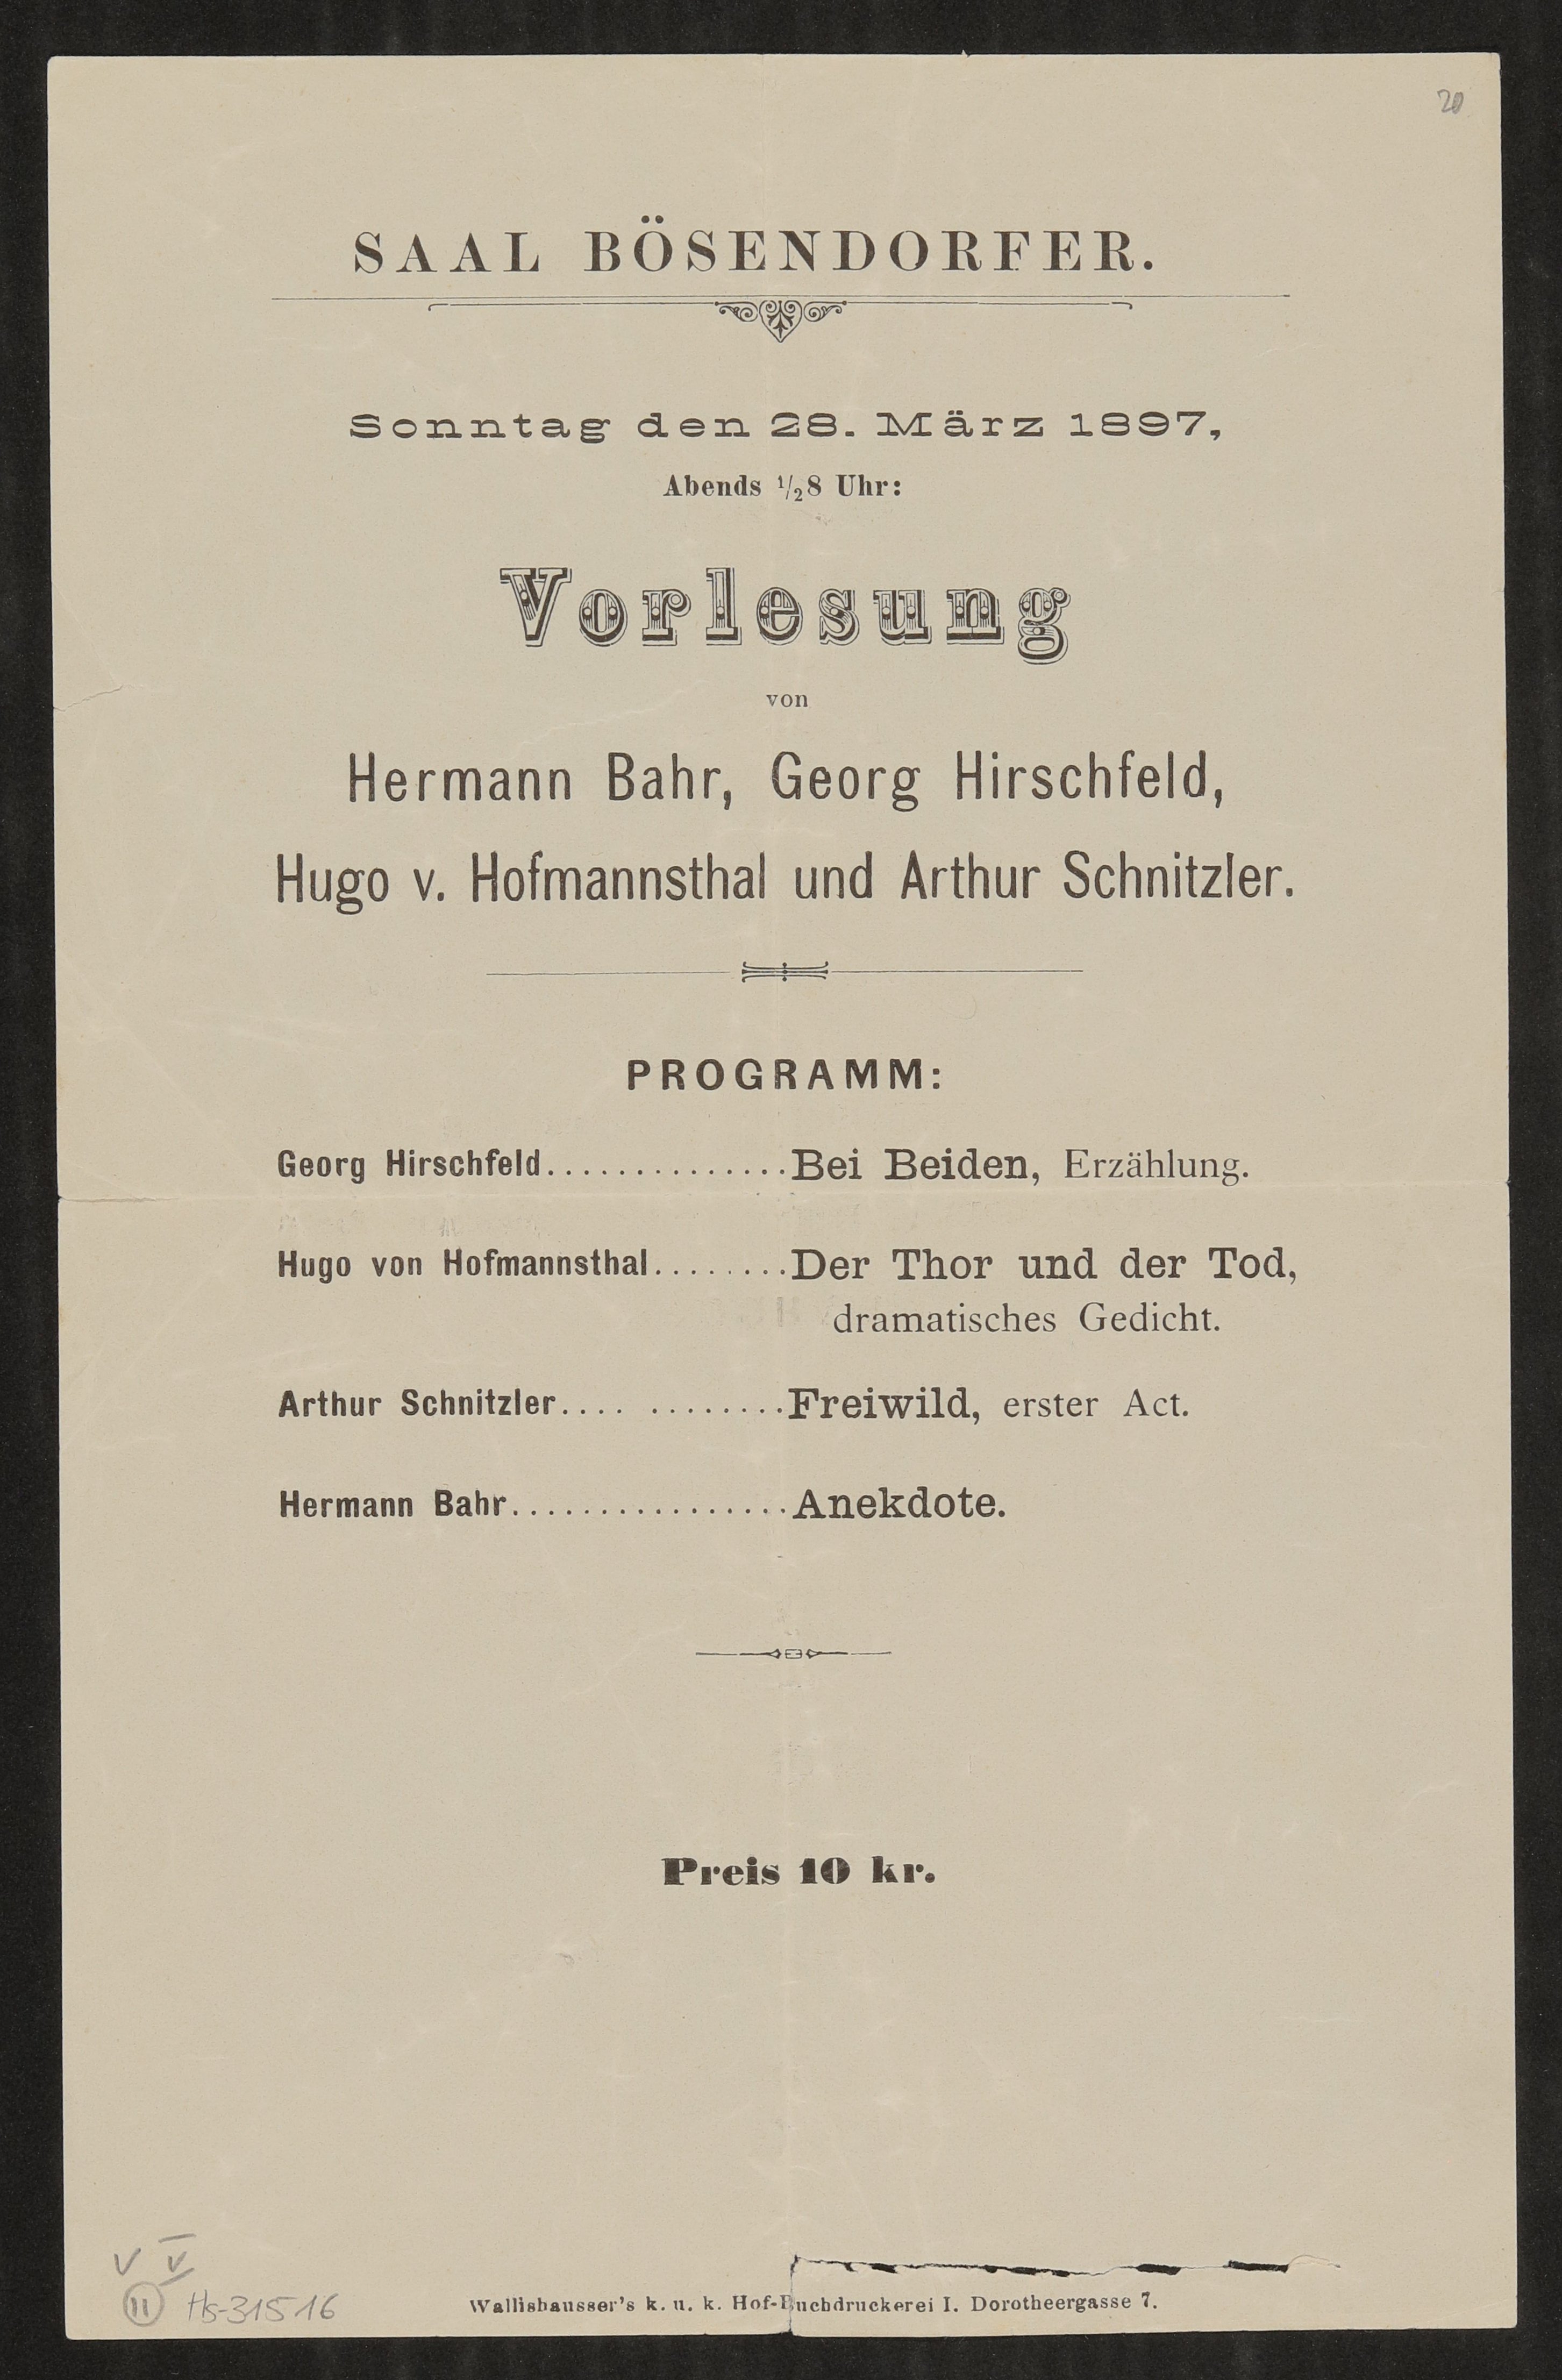 H187_Hs-31516_VV11_002 (Freies Deutsches Hochstift / Frankfurter Goethe-Museum CC BY-NC-SA)